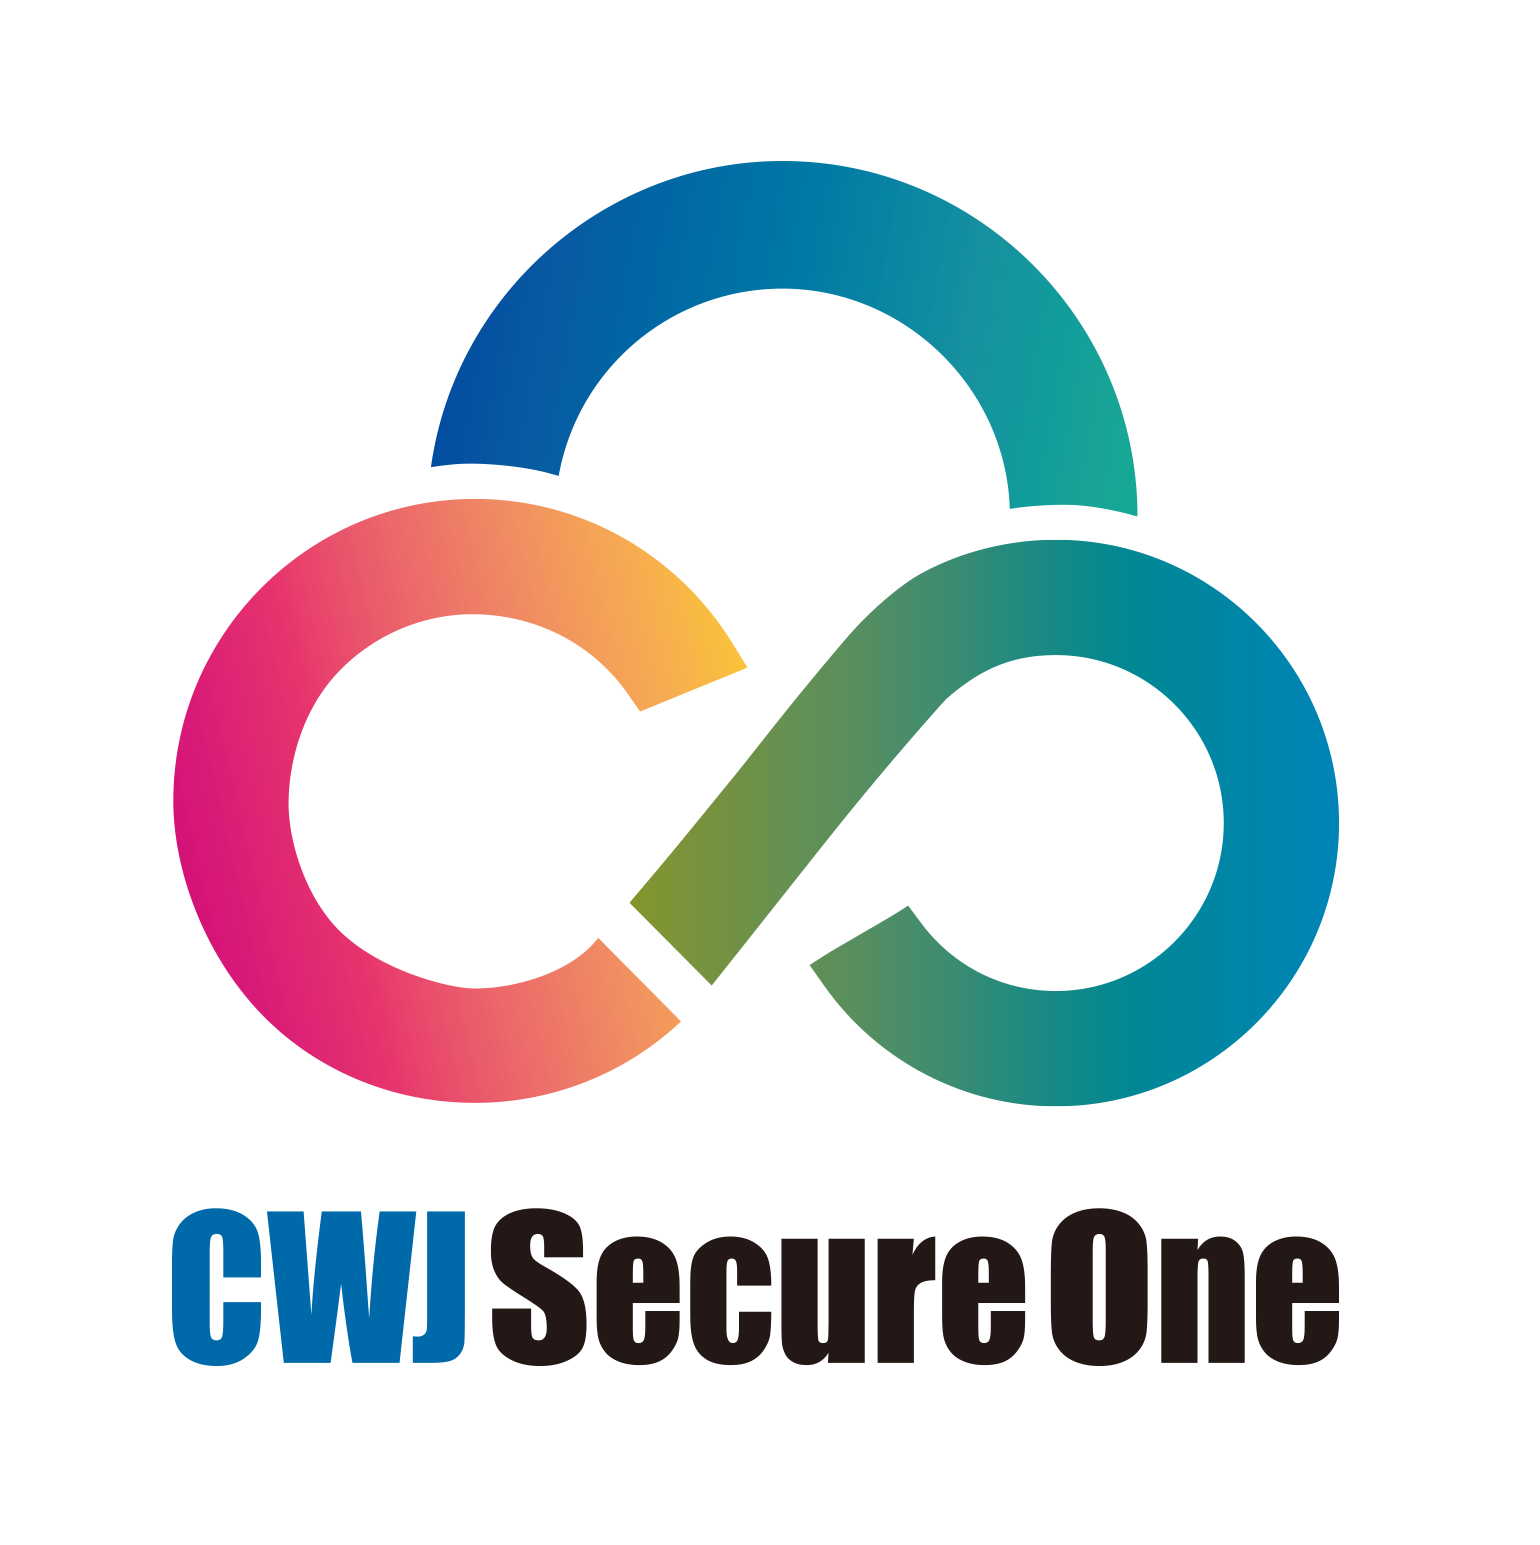 CWJ Secure One